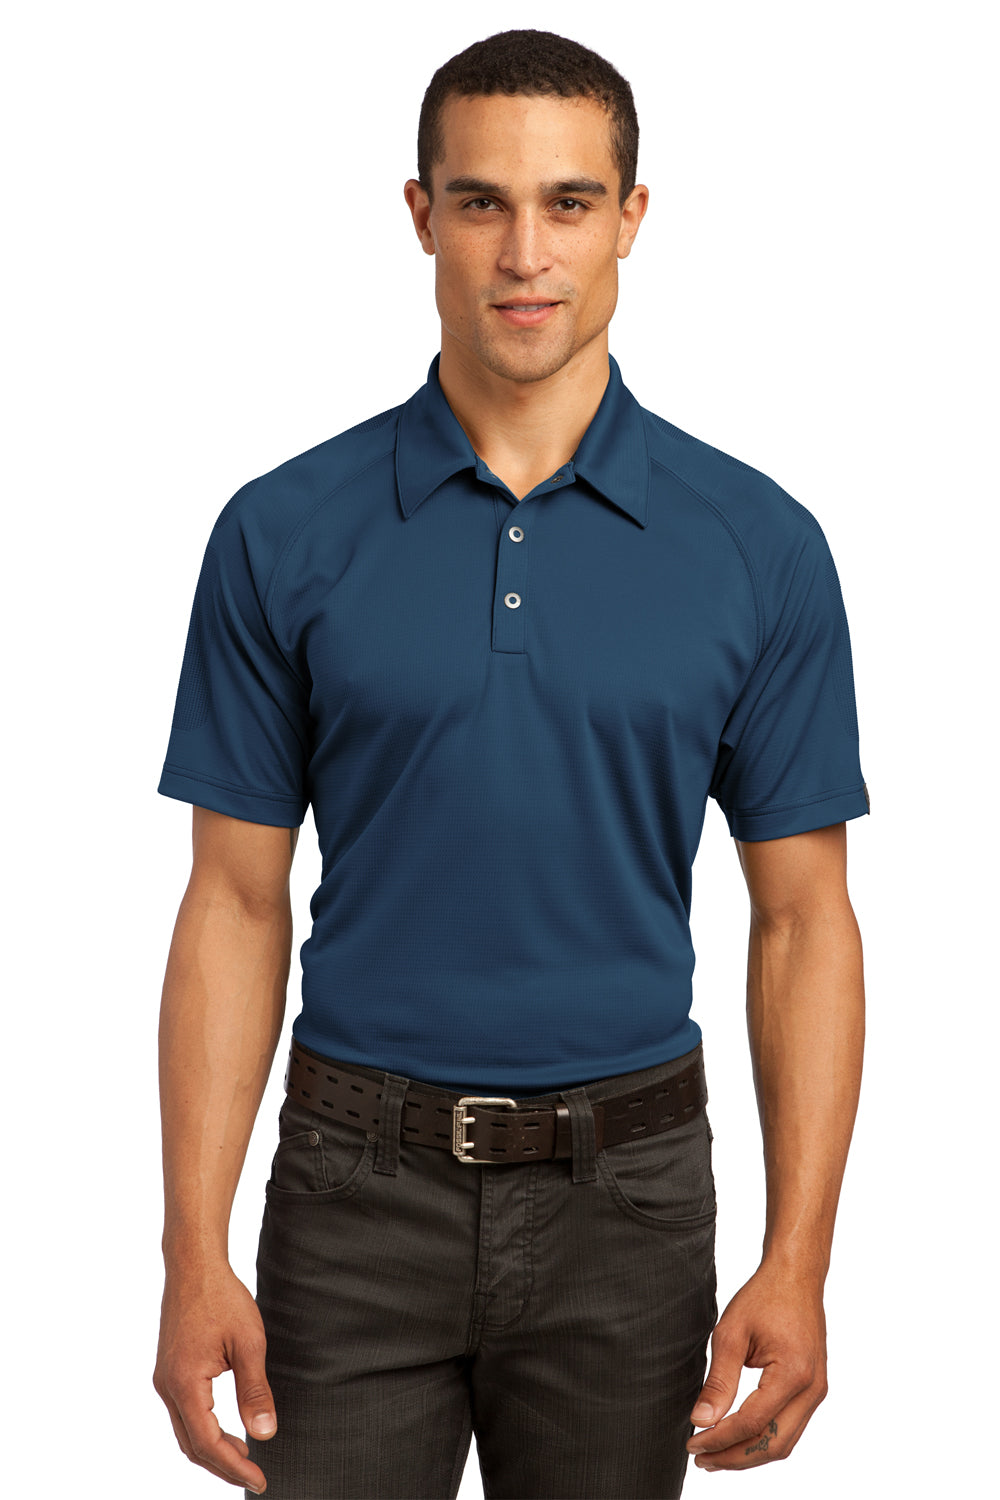 Ogio OG110 Mens Optic Moisture Wicking Short Sleeve Polo Shirt Indigo Blue Front